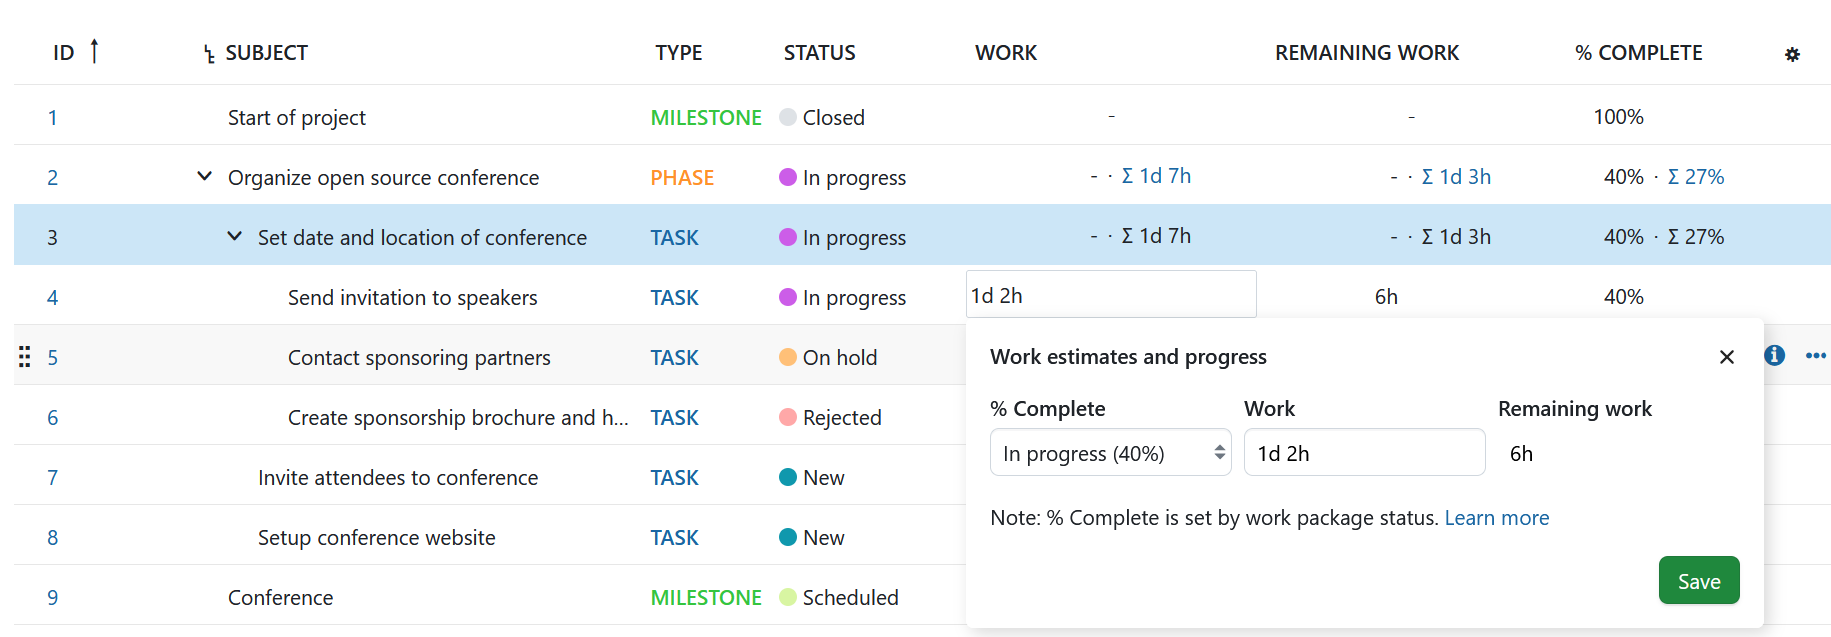 work package table displaying status-based progress reporting